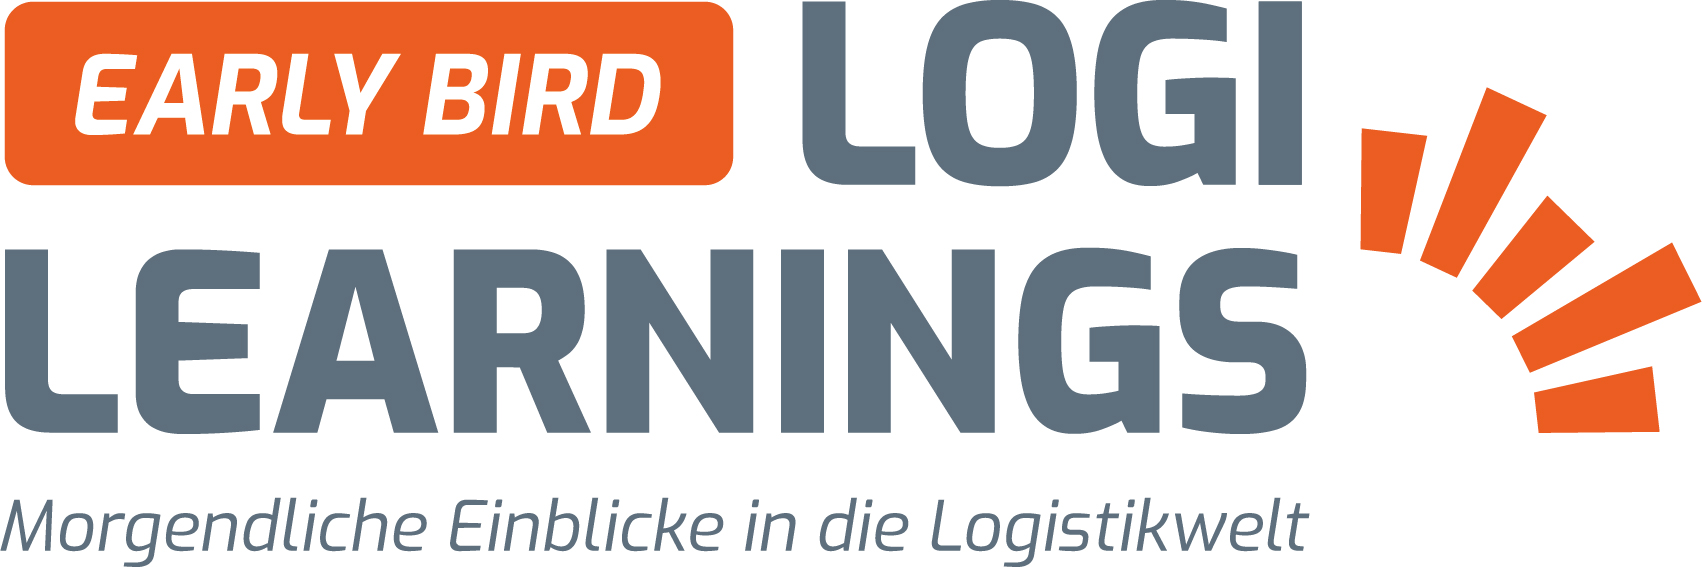 Inther-Logi-Learnings-Logo.jpg